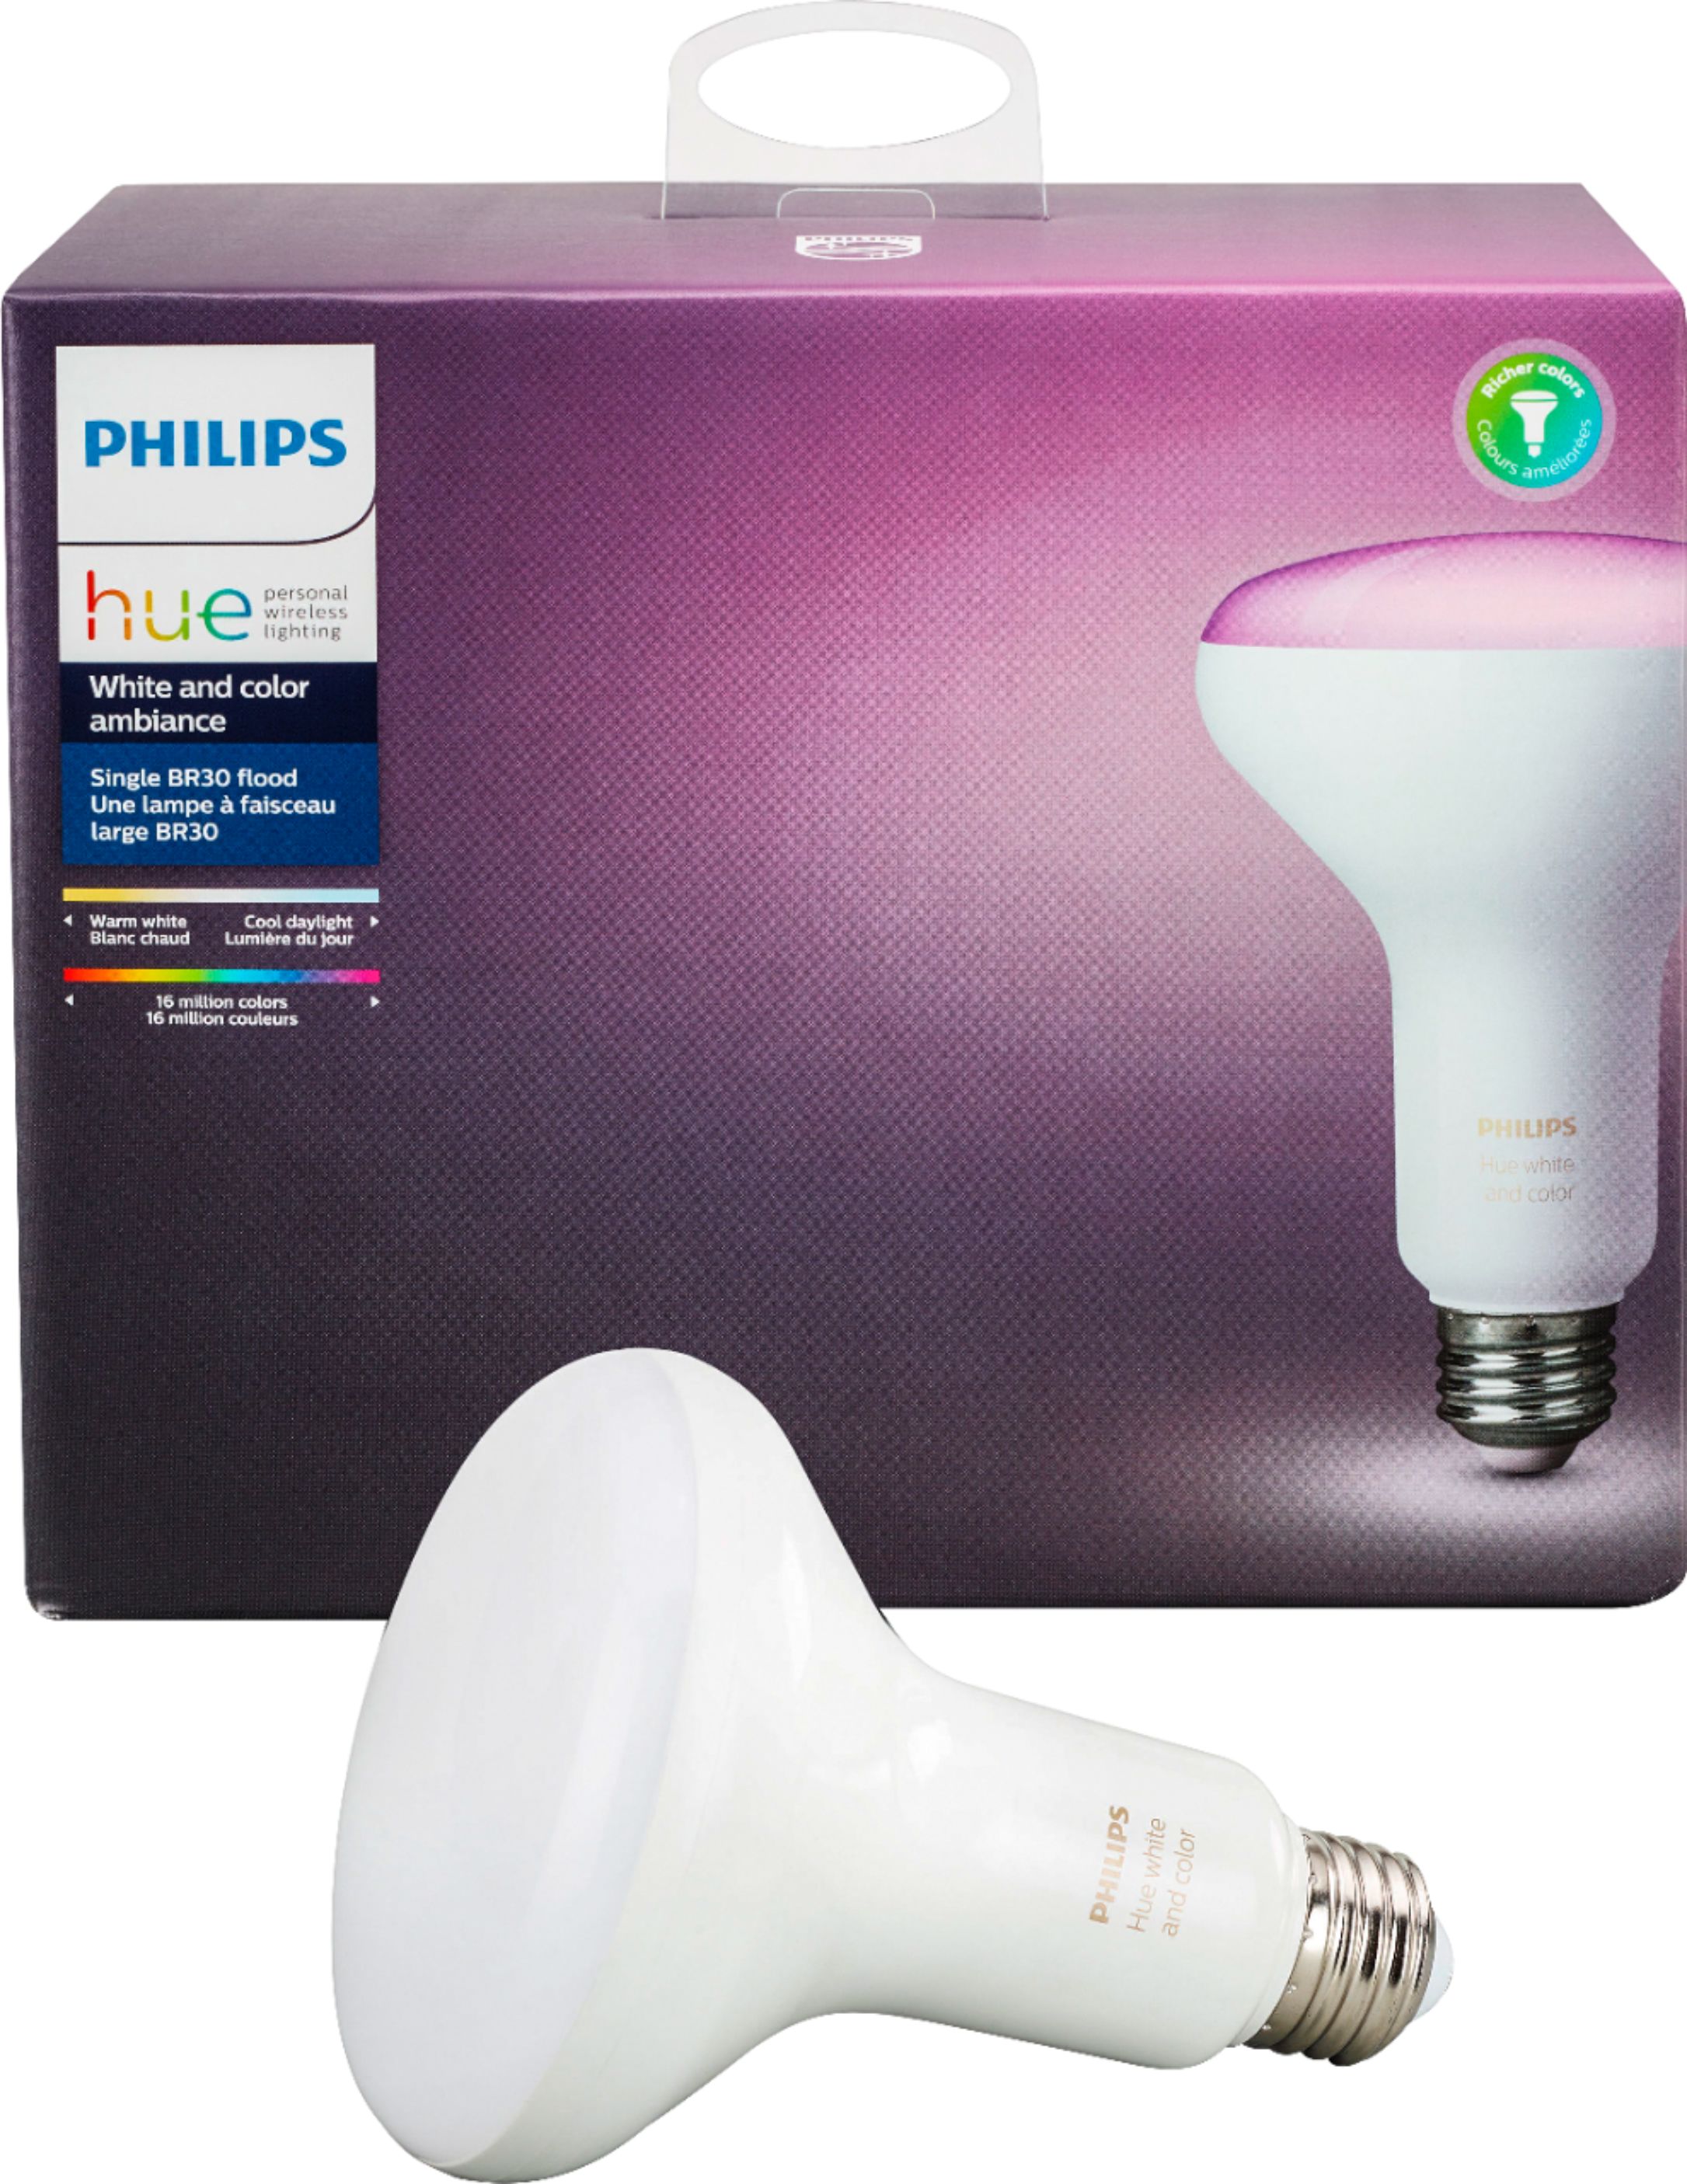 gårdsplads Merchandiser jord Philips Hue White and Color Ambiance BR30 Wi-Fi Smart LED Floodlight Bulb  California Residents Multicolor 530188 - Best Buy